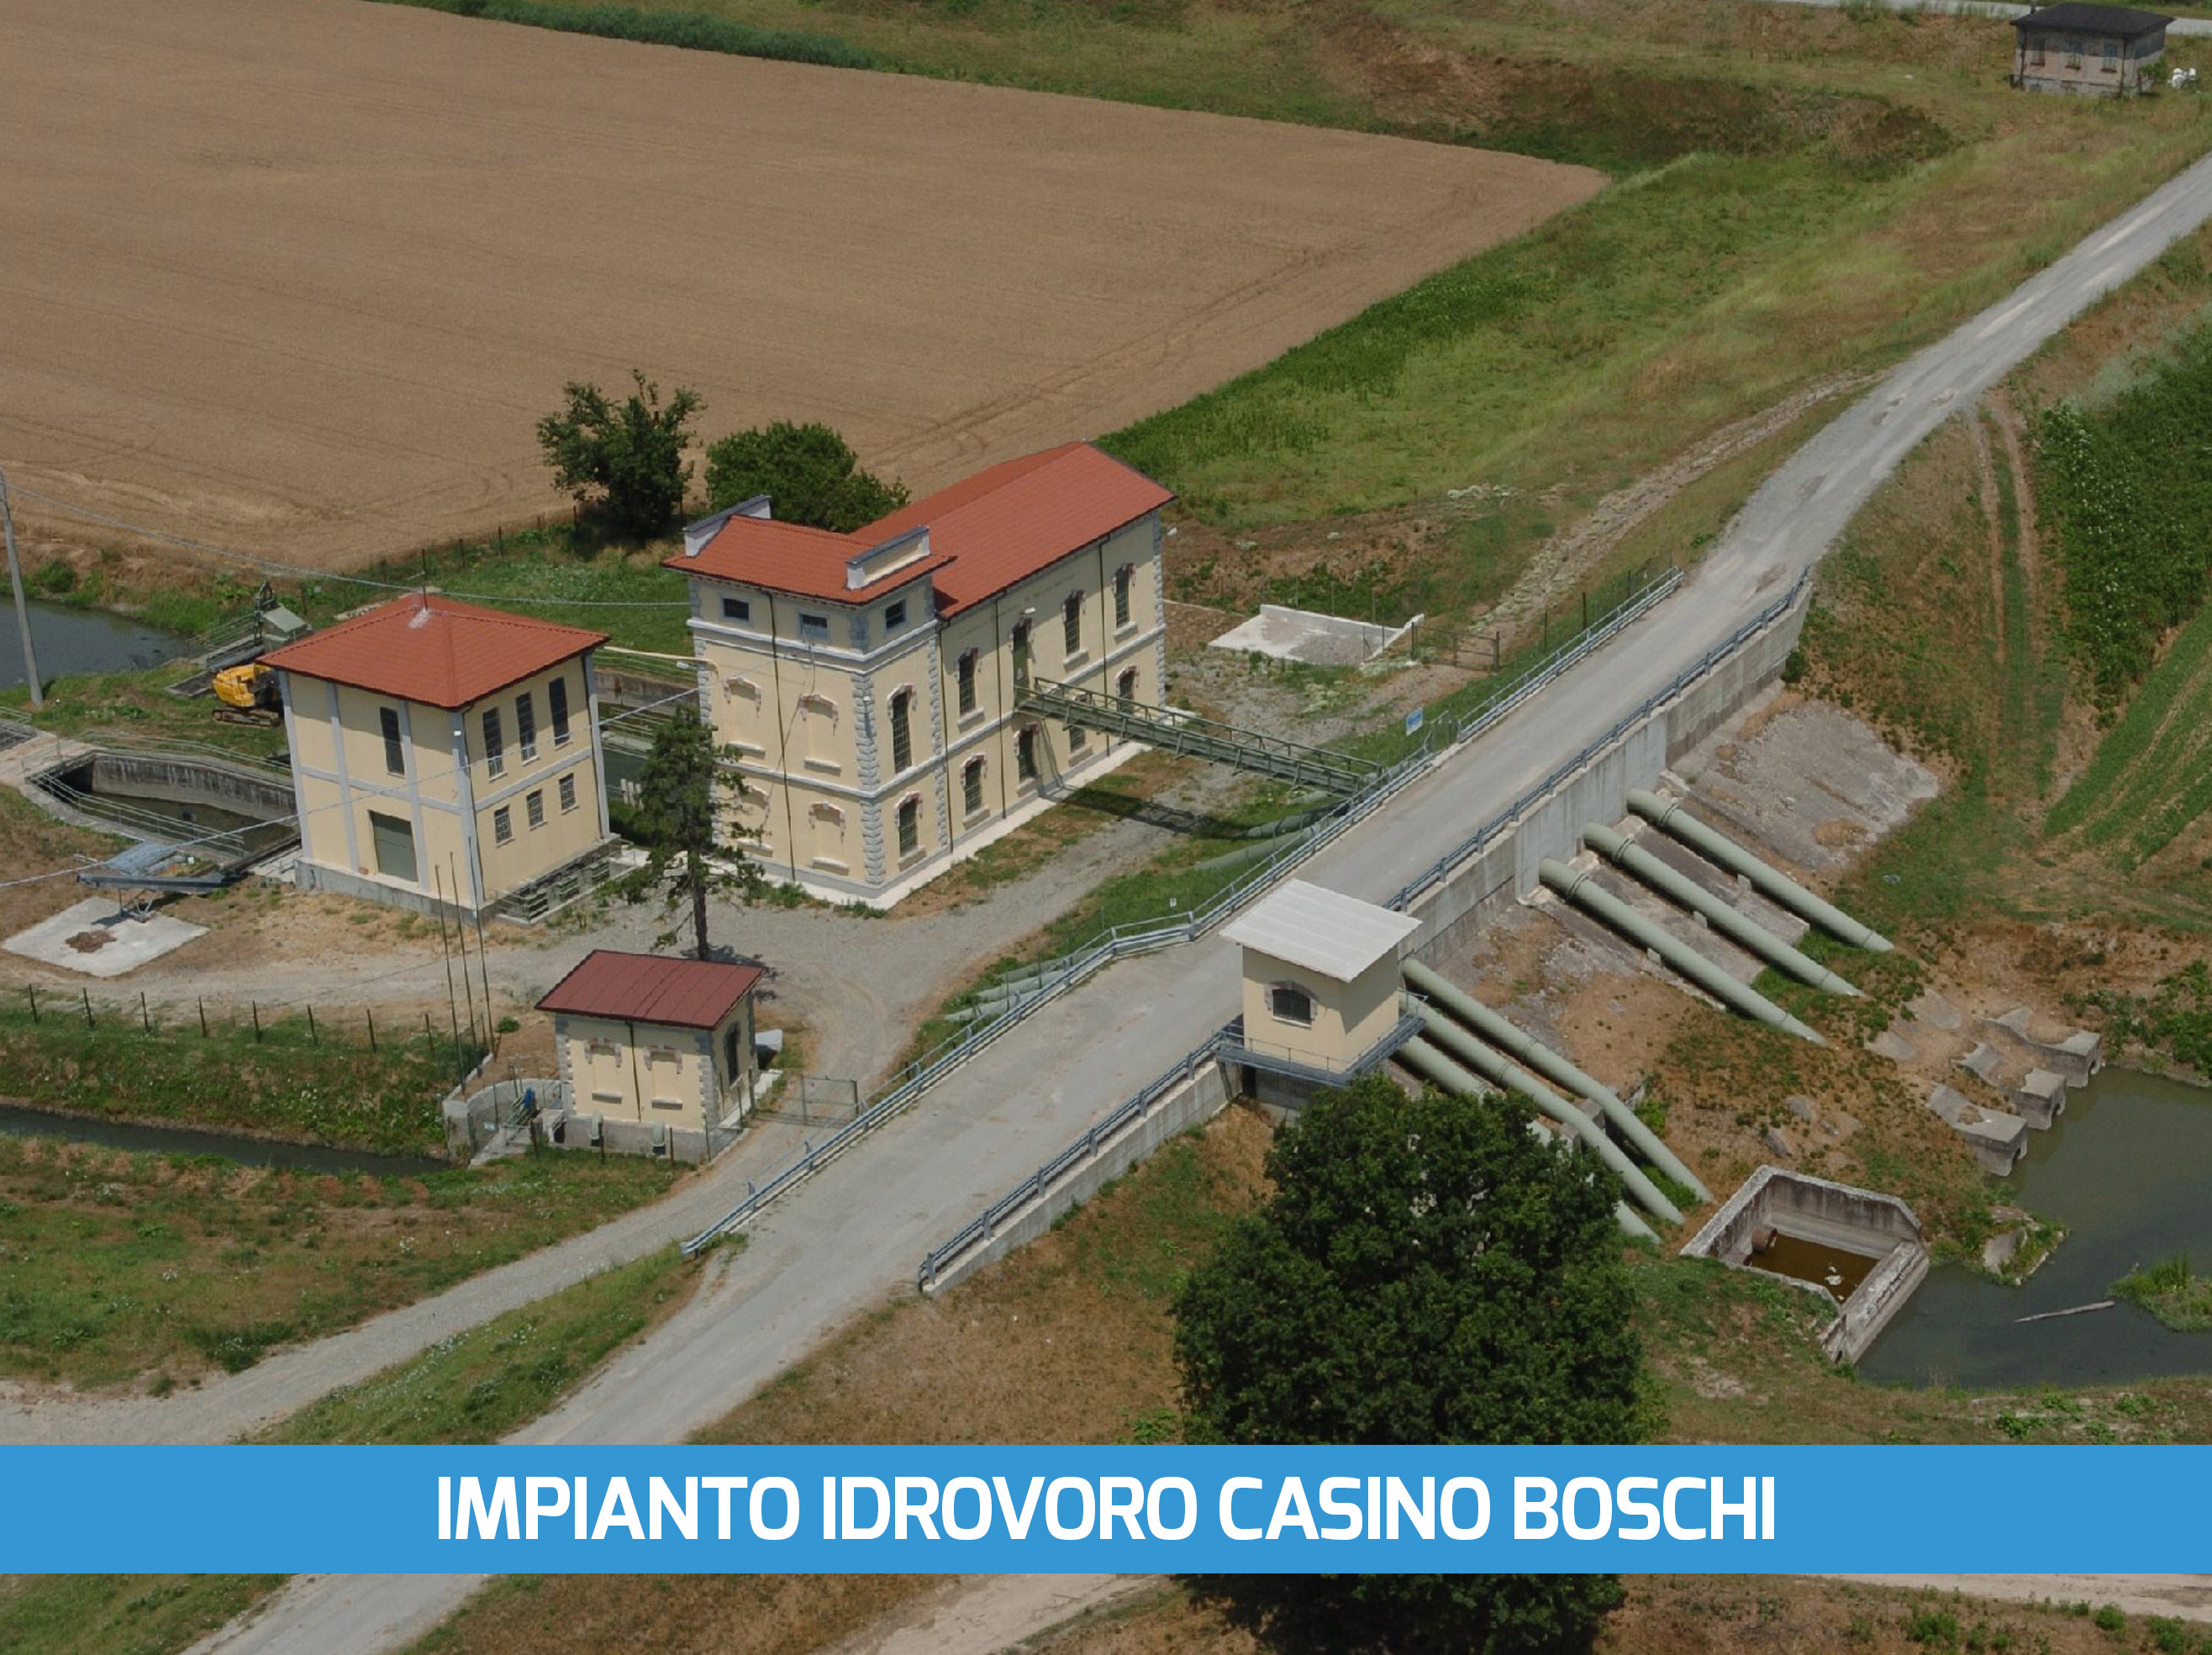 Casino Boschi